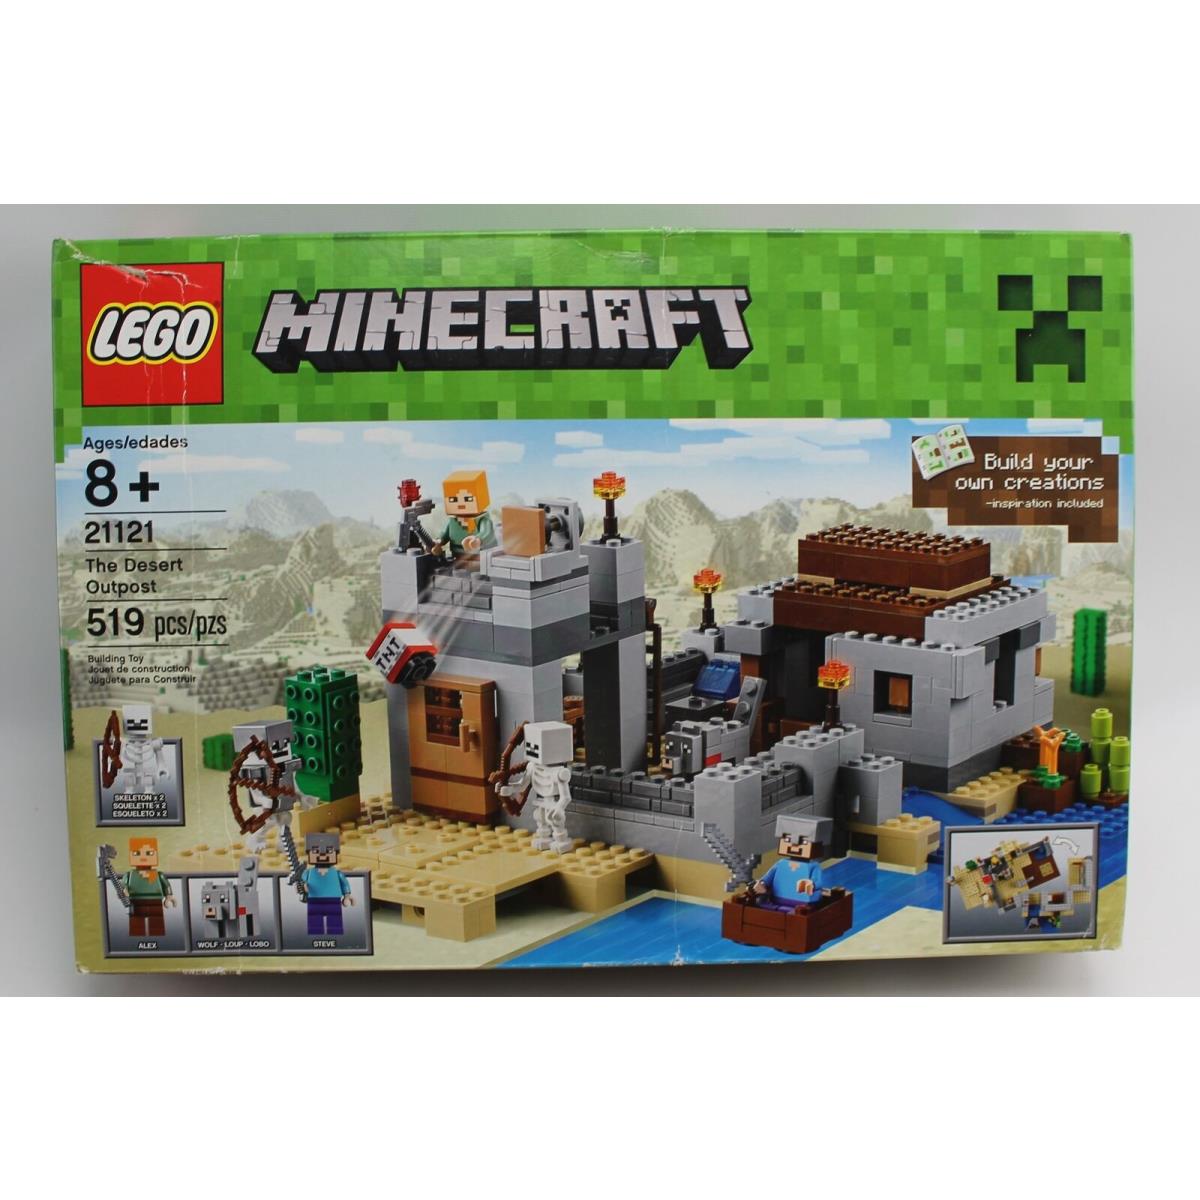 Lego Minecraft The Desert Outpost Set 21121